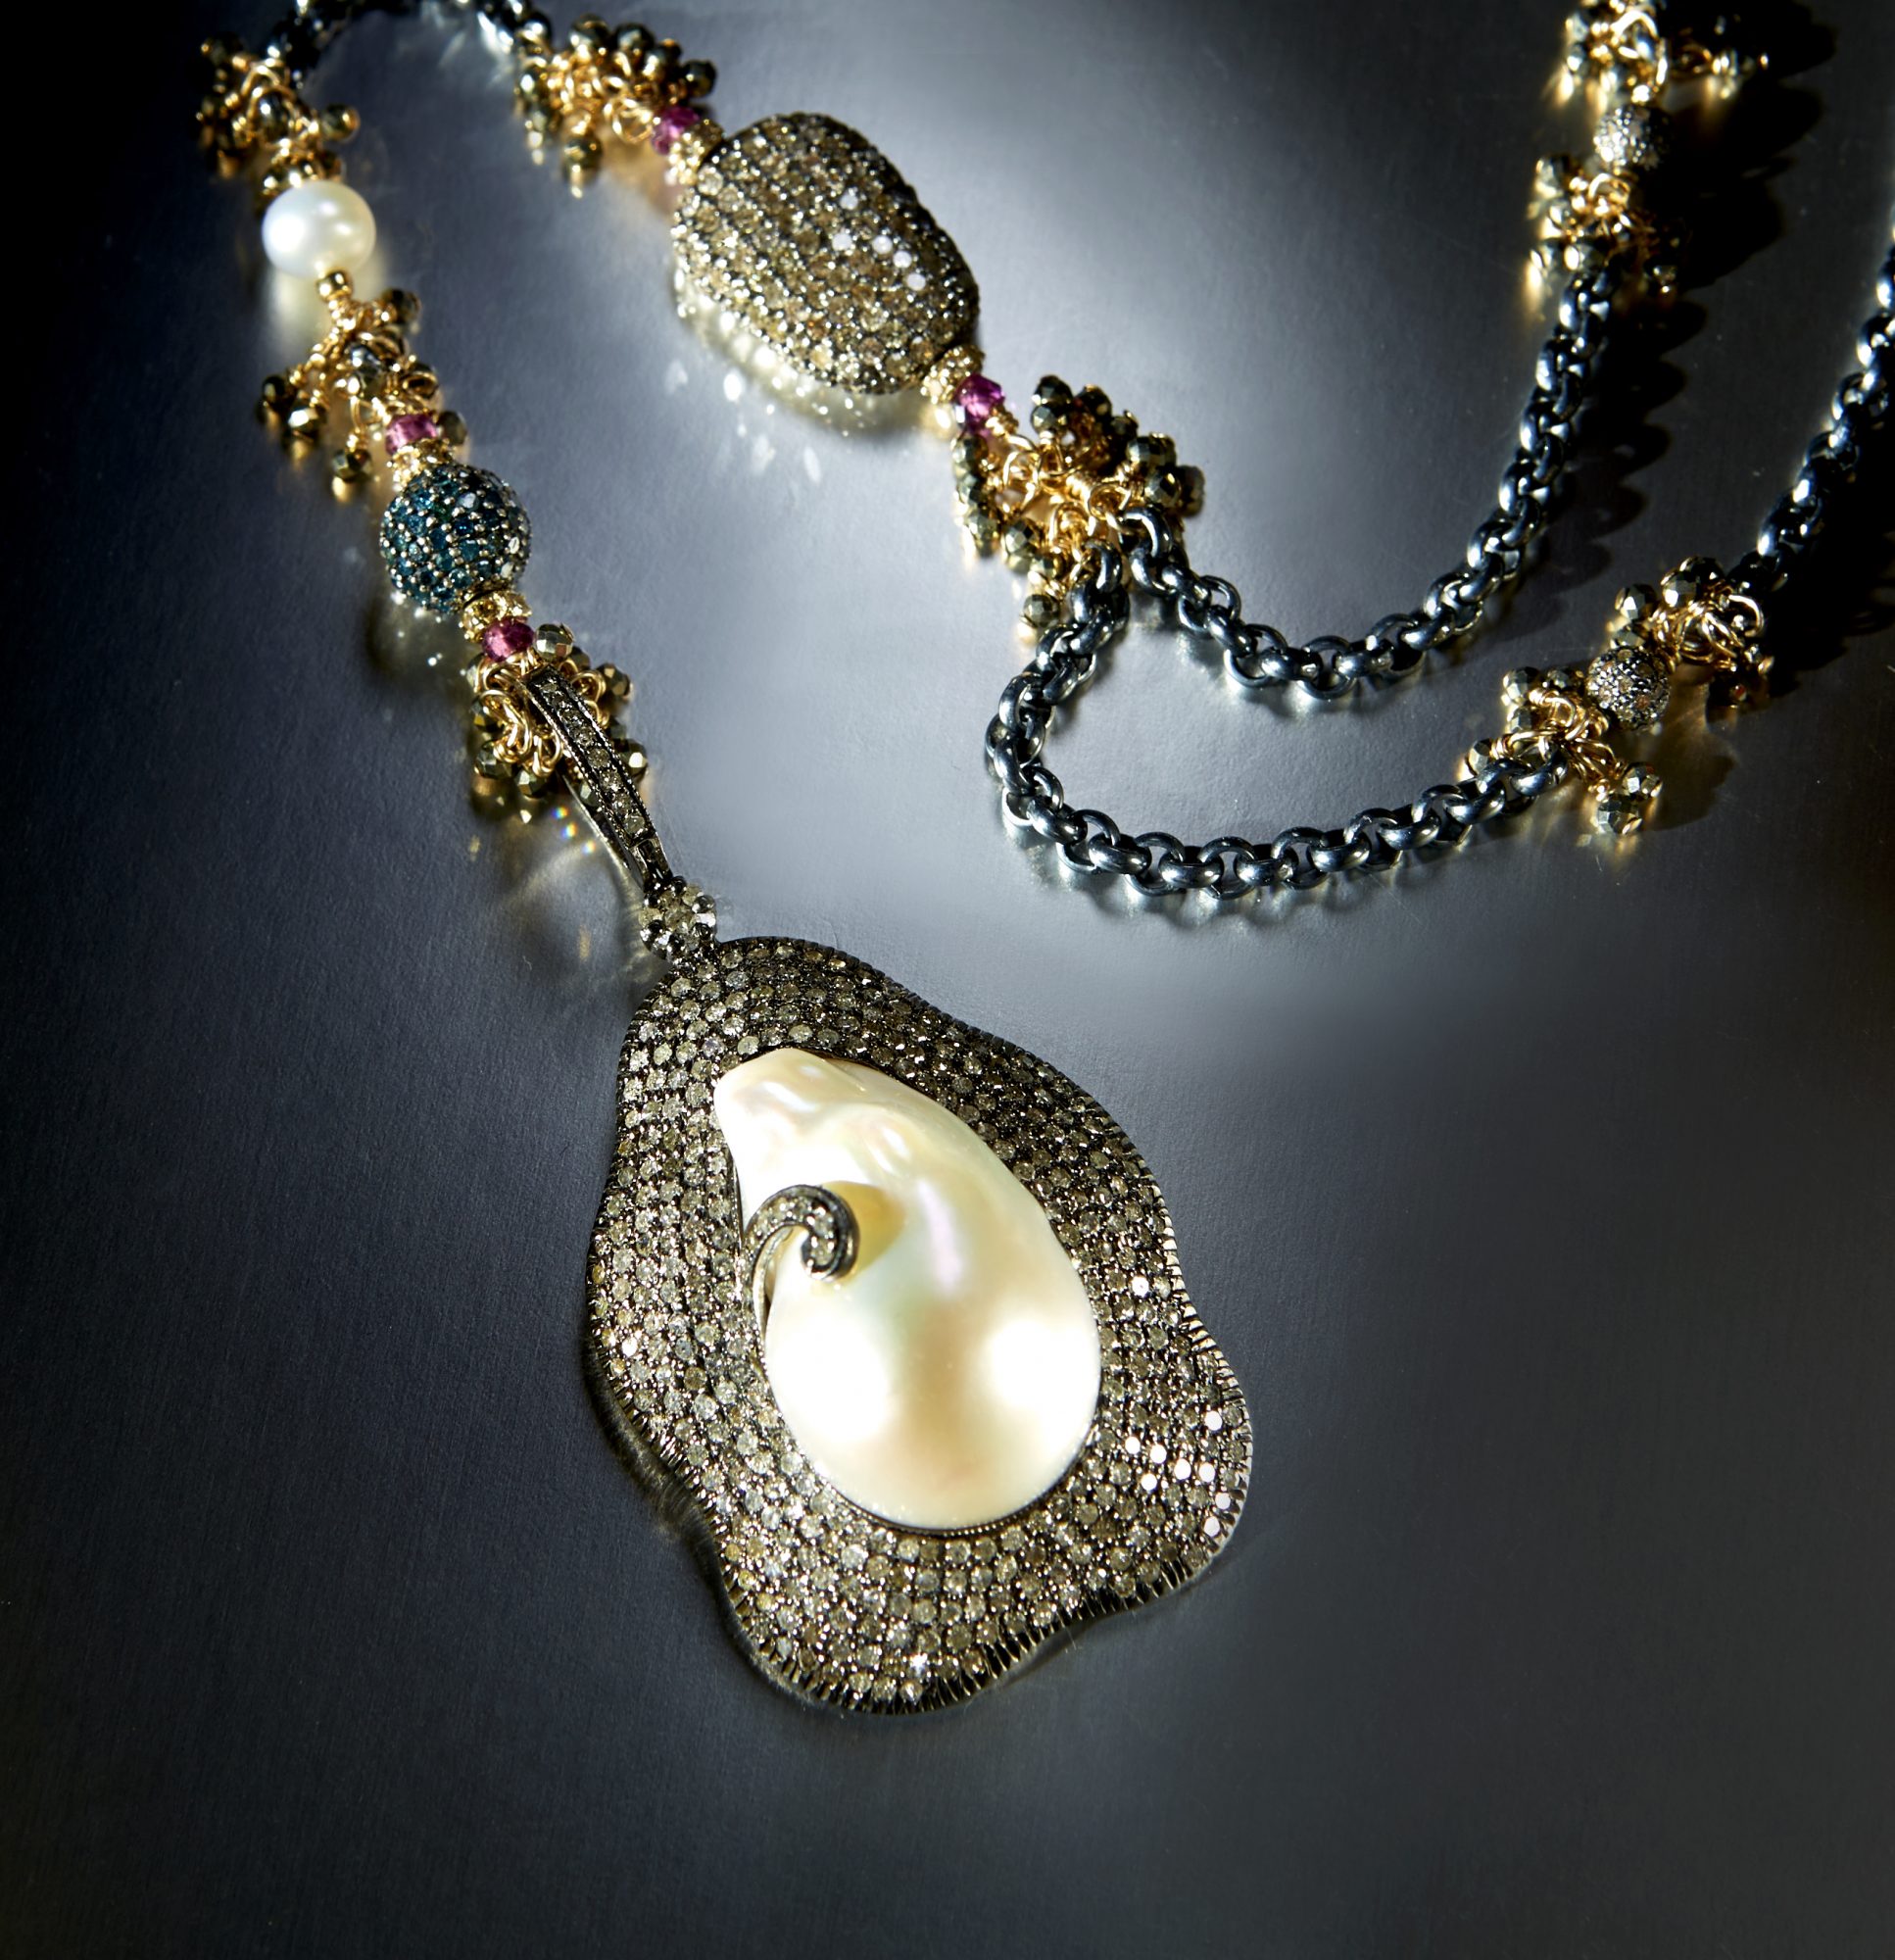 Jewelry by Talia Don Designs - Neiman Marcus, Short Hill NJHere